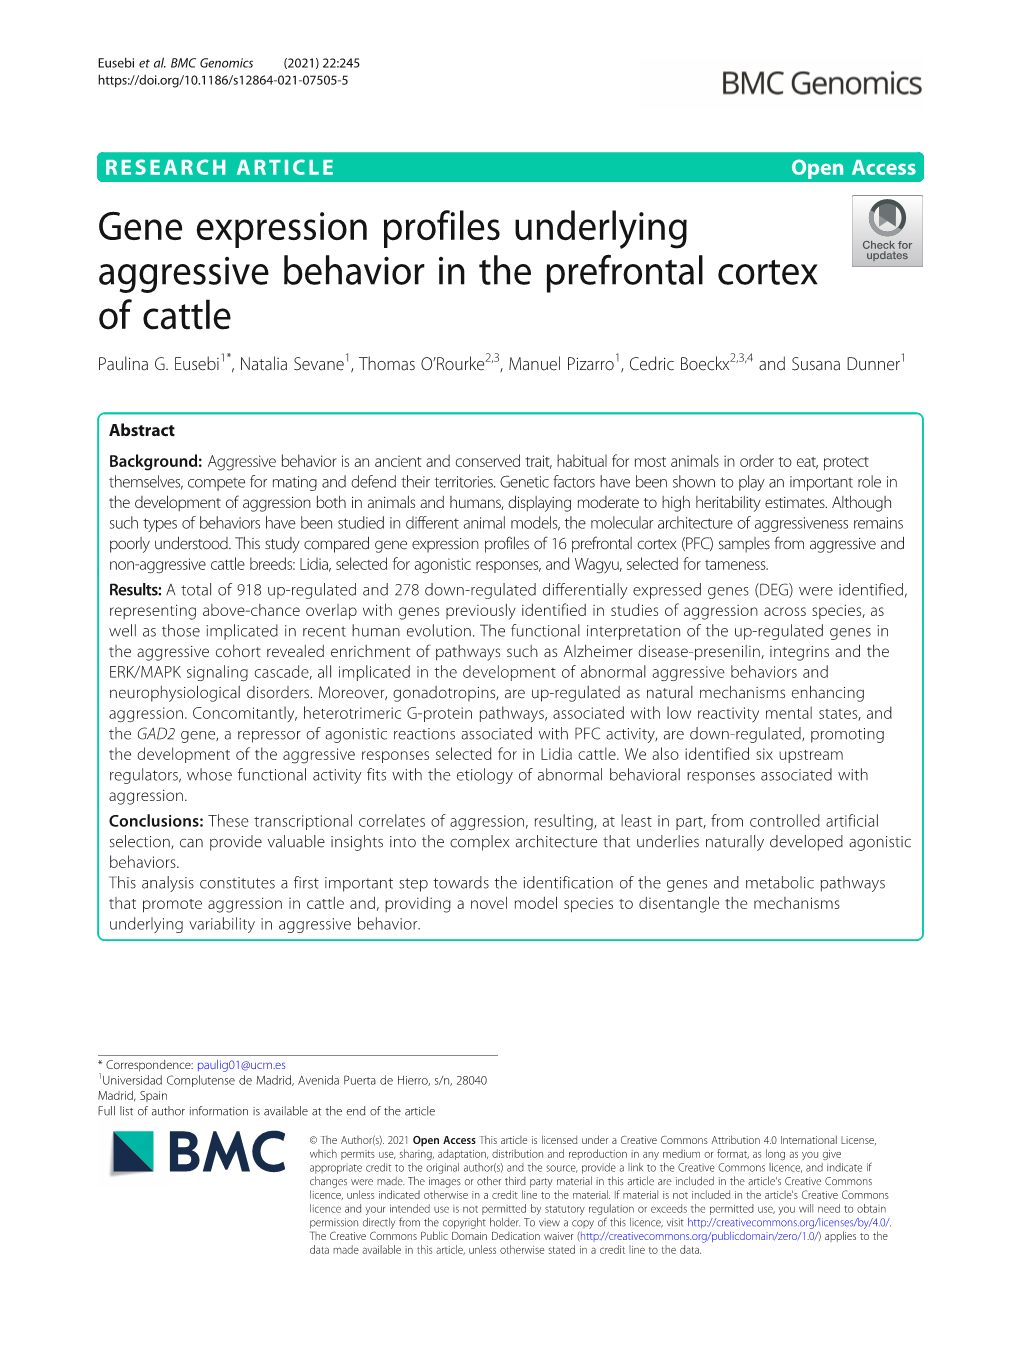 Gene Expression Profiles Underlying Aggressive Behavior in the Prefrontal Cortex of Cattle Paulina G